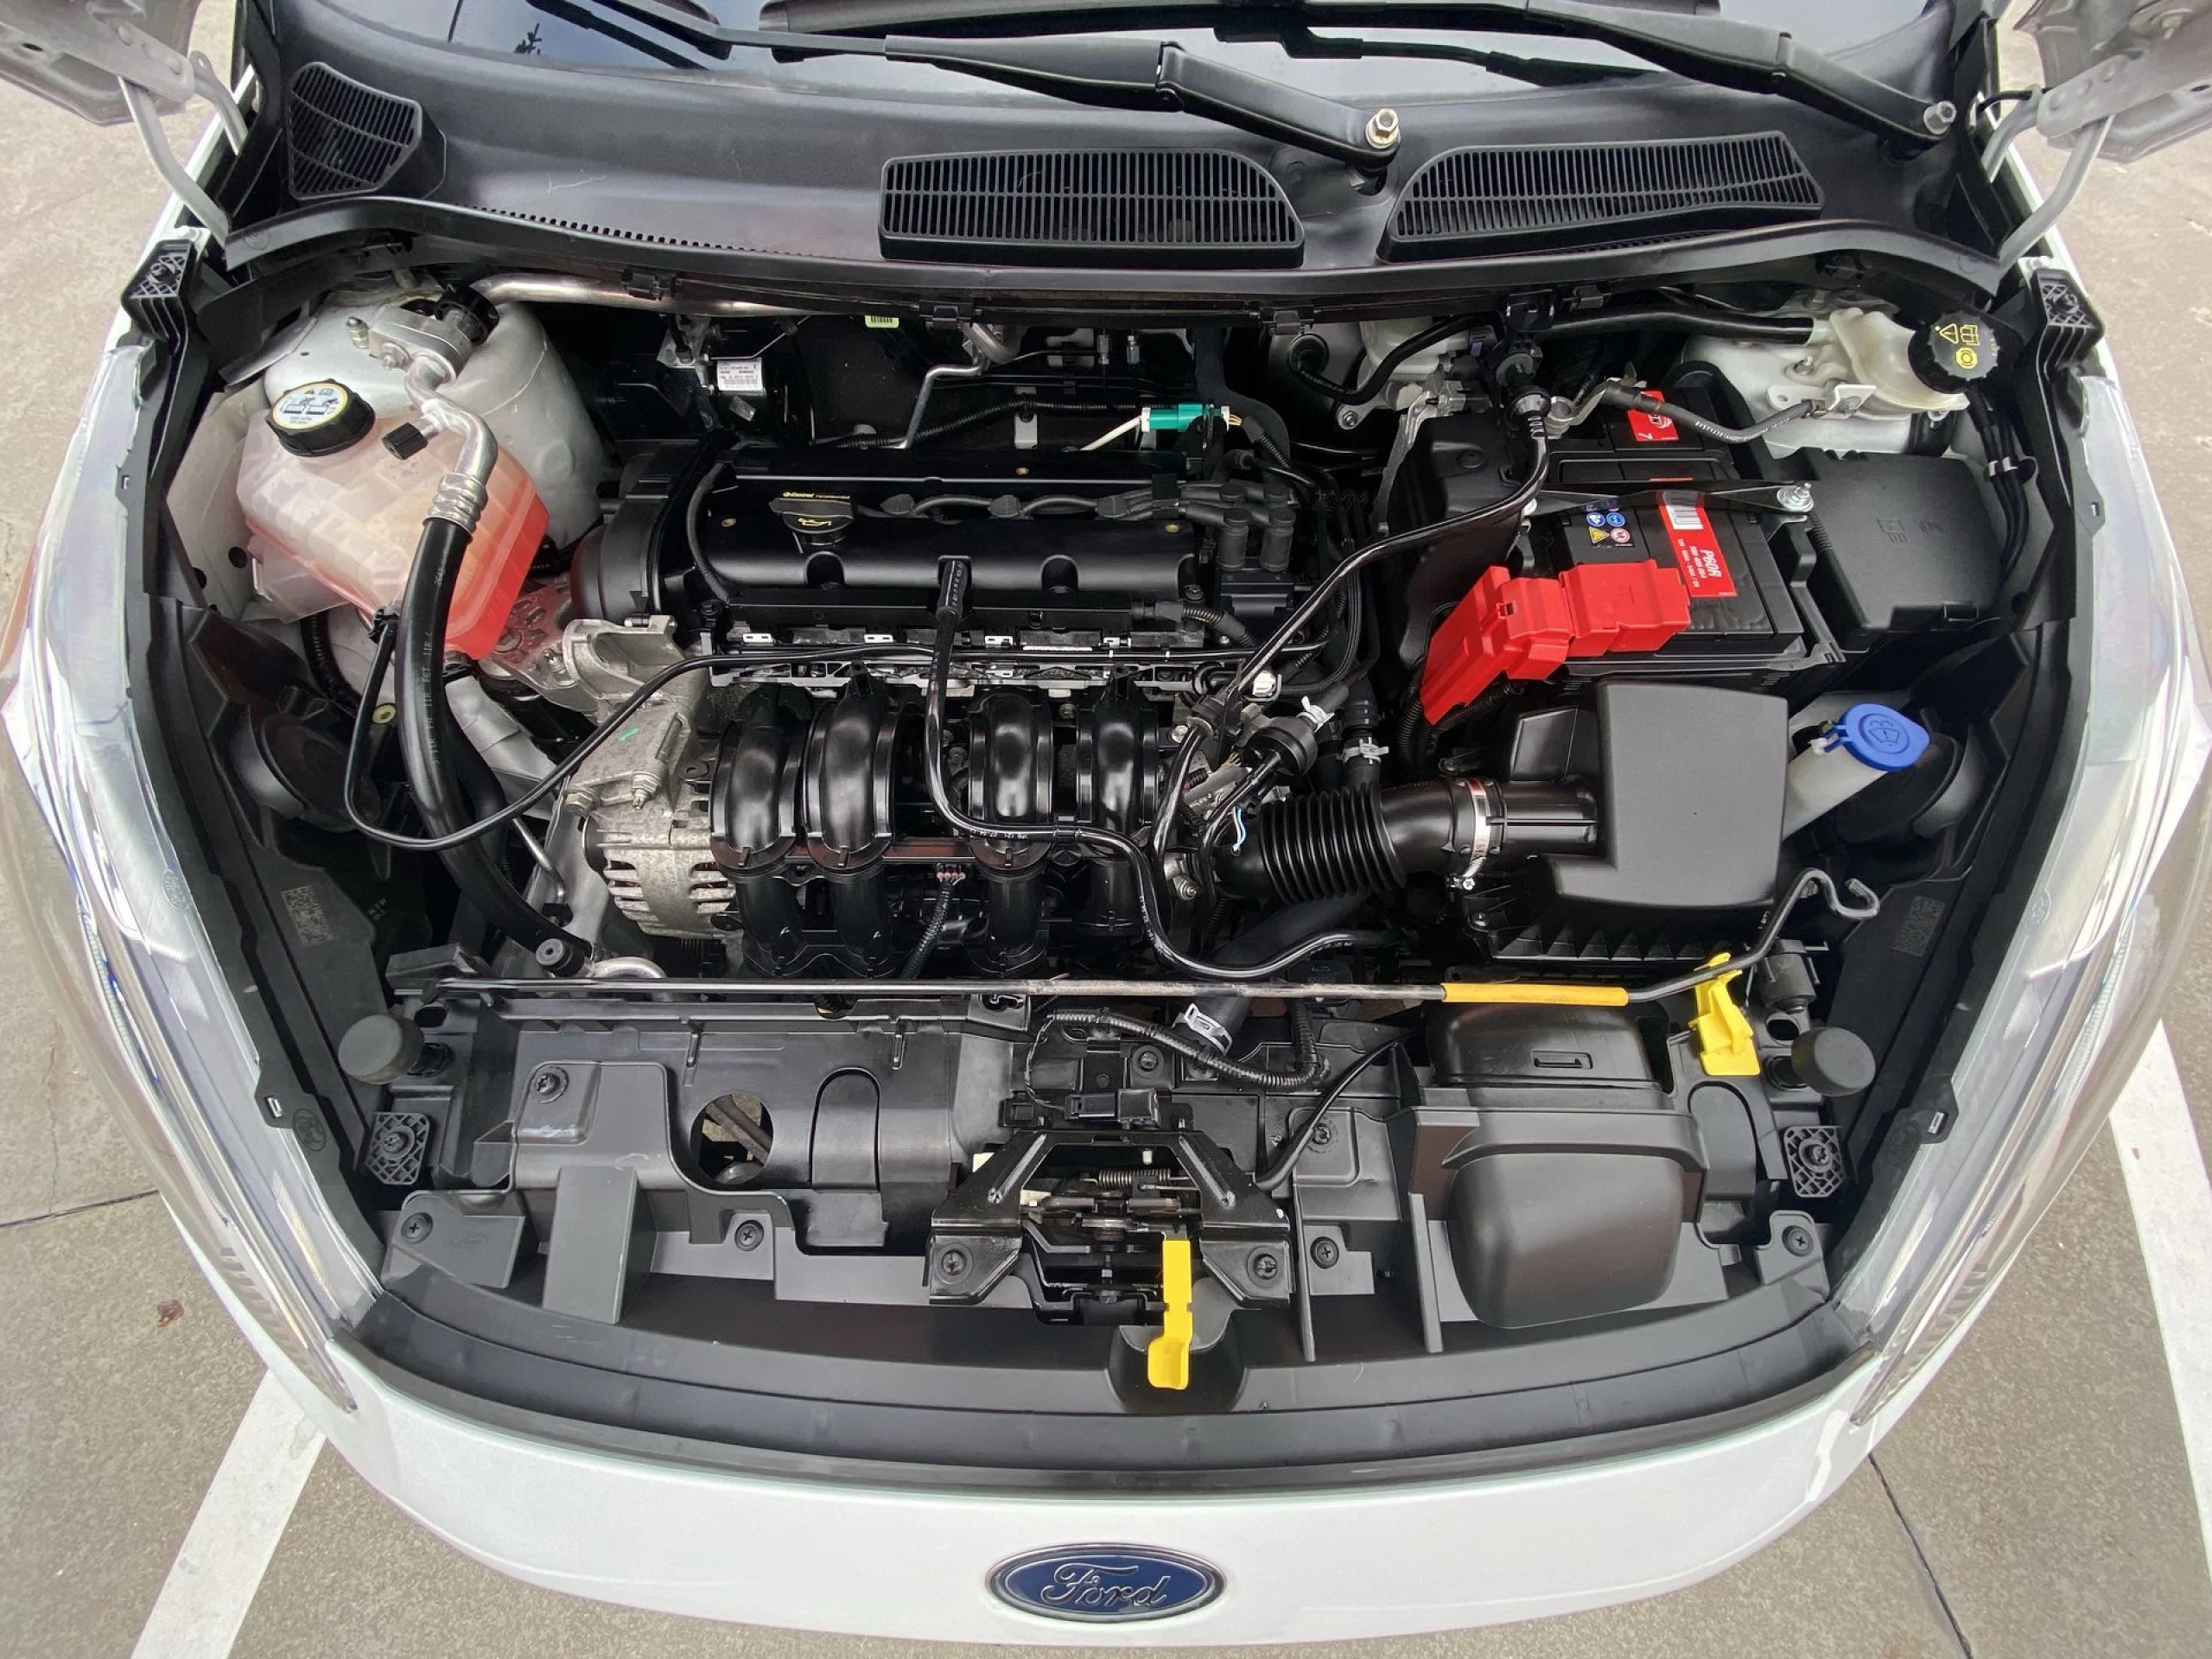 Ford Fiesta 1.25 Duratec Trend 60 kW (82 CV) - Foto 20